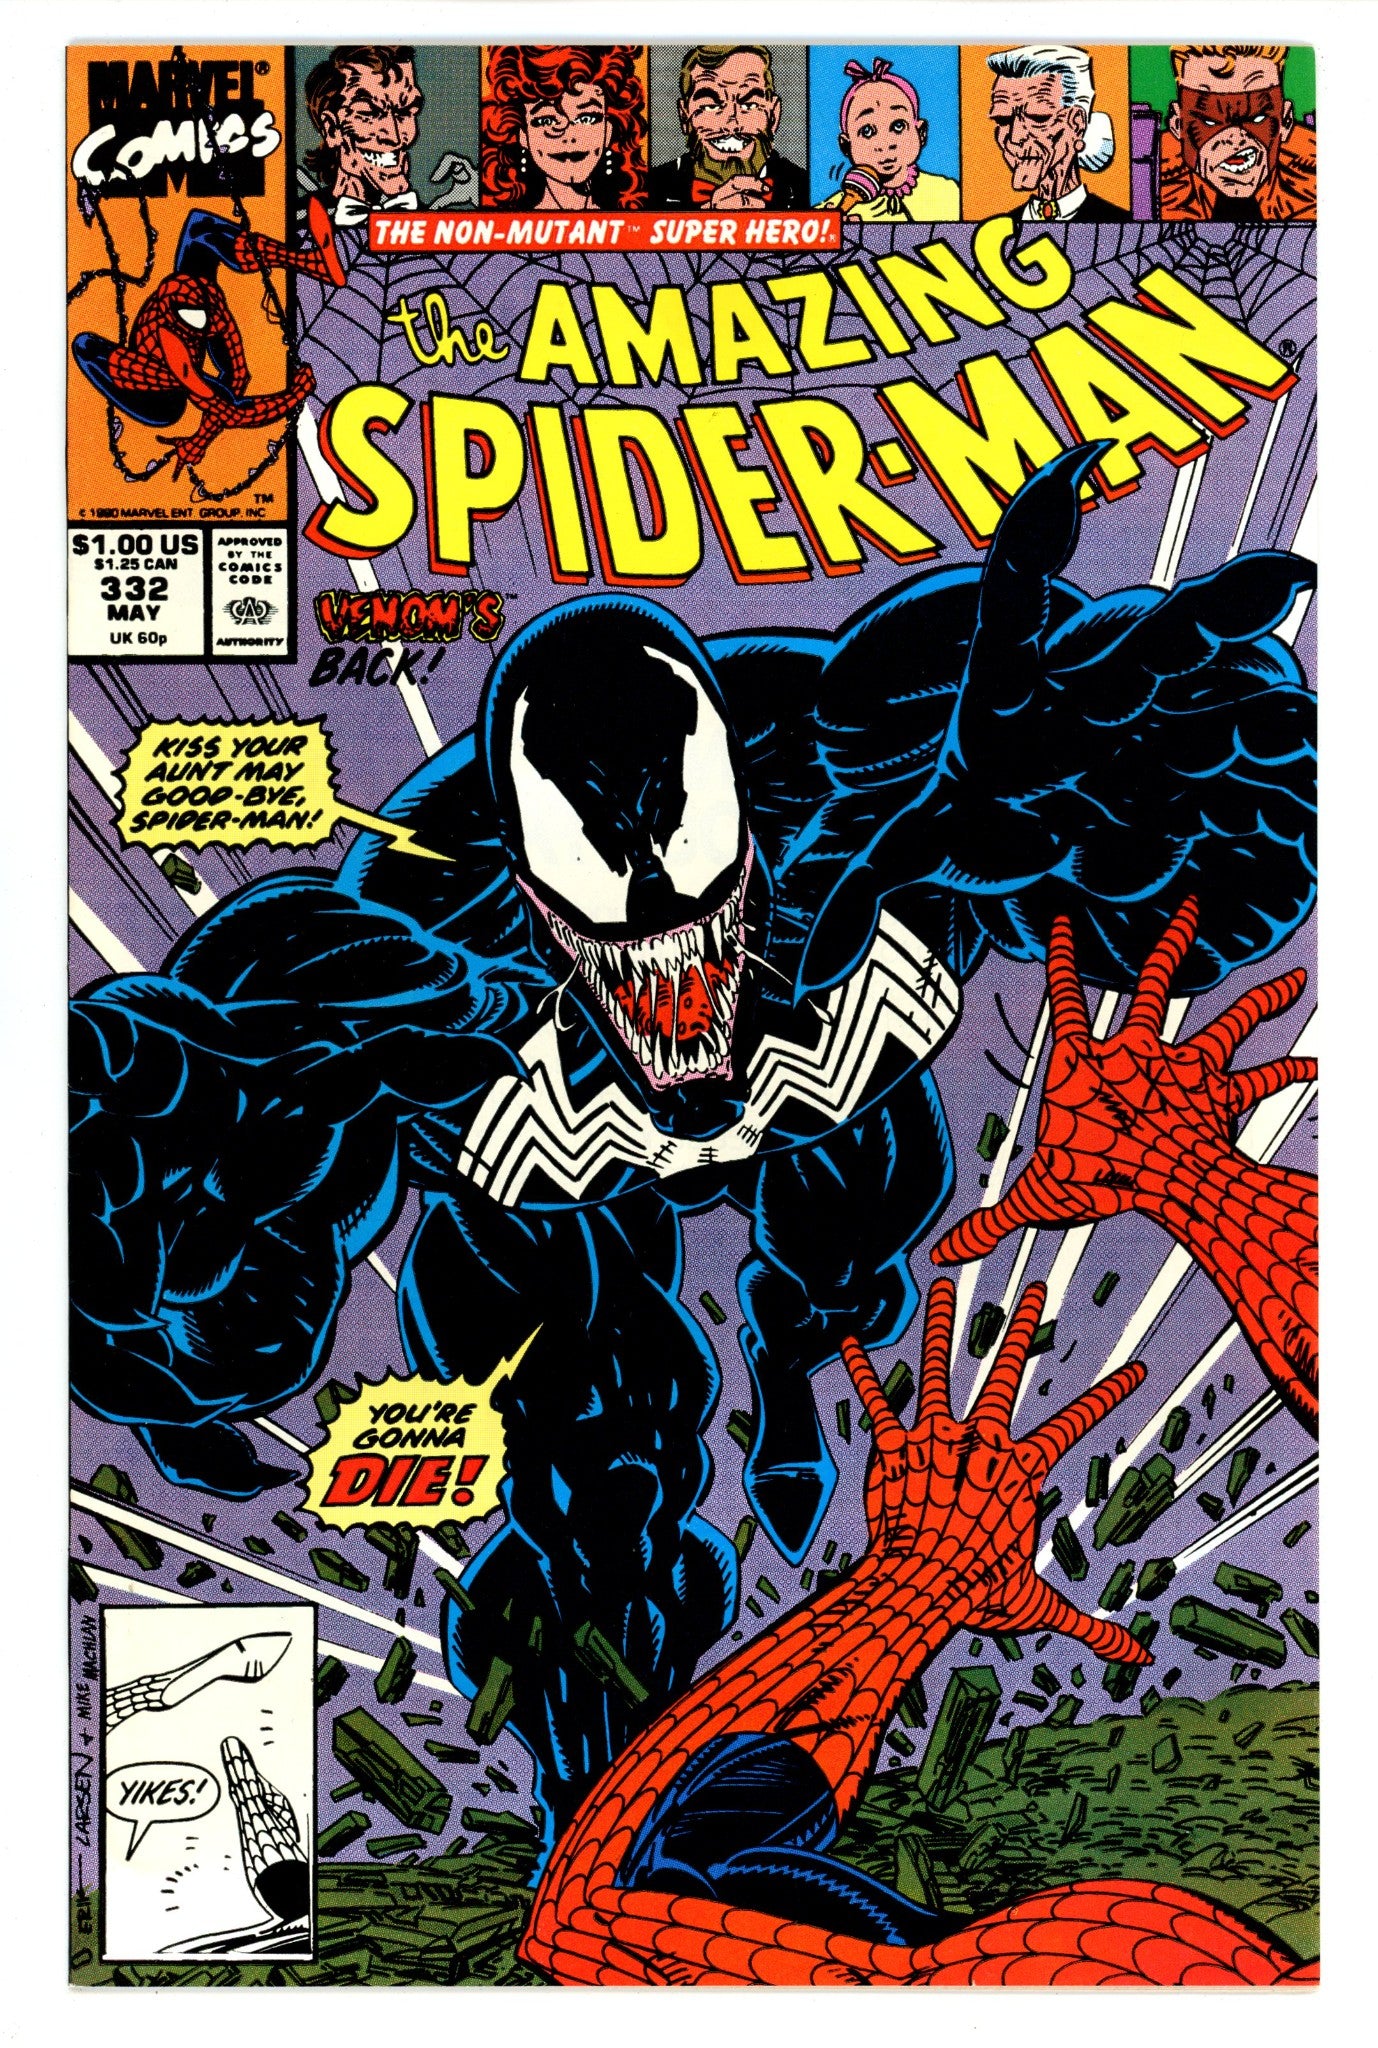 The Amazing Spider-Man Vol 1 332 VF+ (8.5) (1990) 